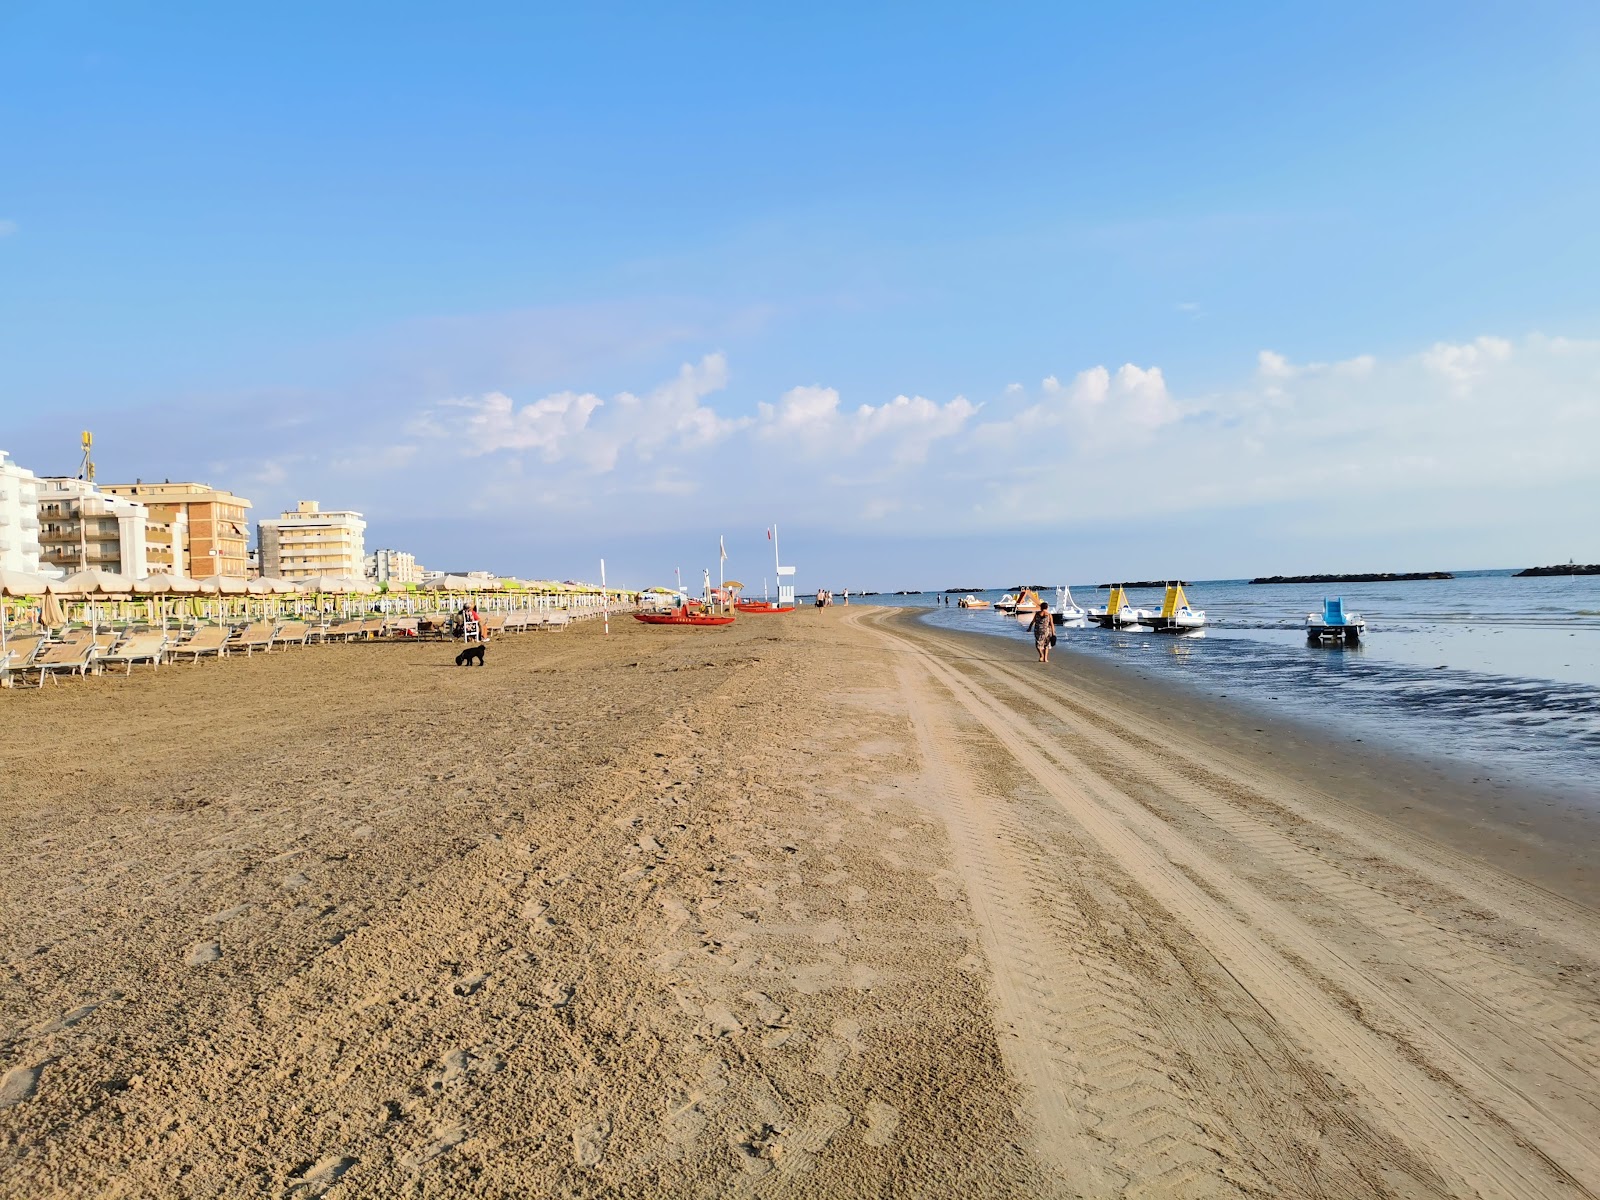 Foto af Spiaggia Libera Igea Marina med lys sand overflade